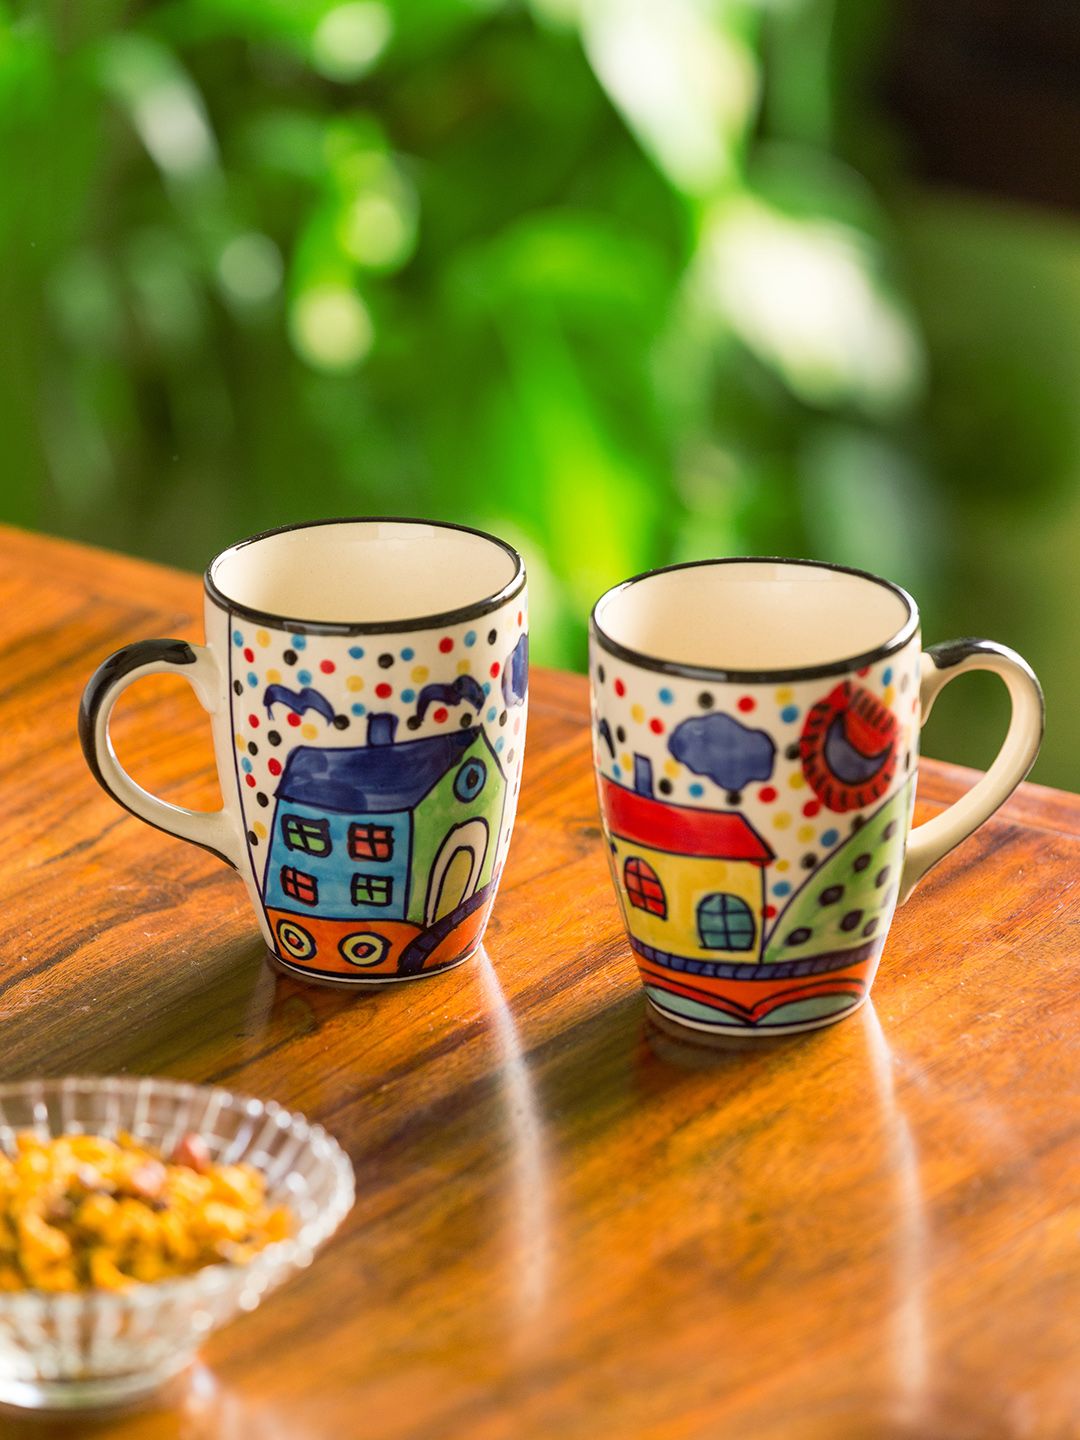 ExclusiveLane 'The Hut Jumbo Cuppas' Hand-Painted Mugs In Ceramic (Set Of 2) Price in India